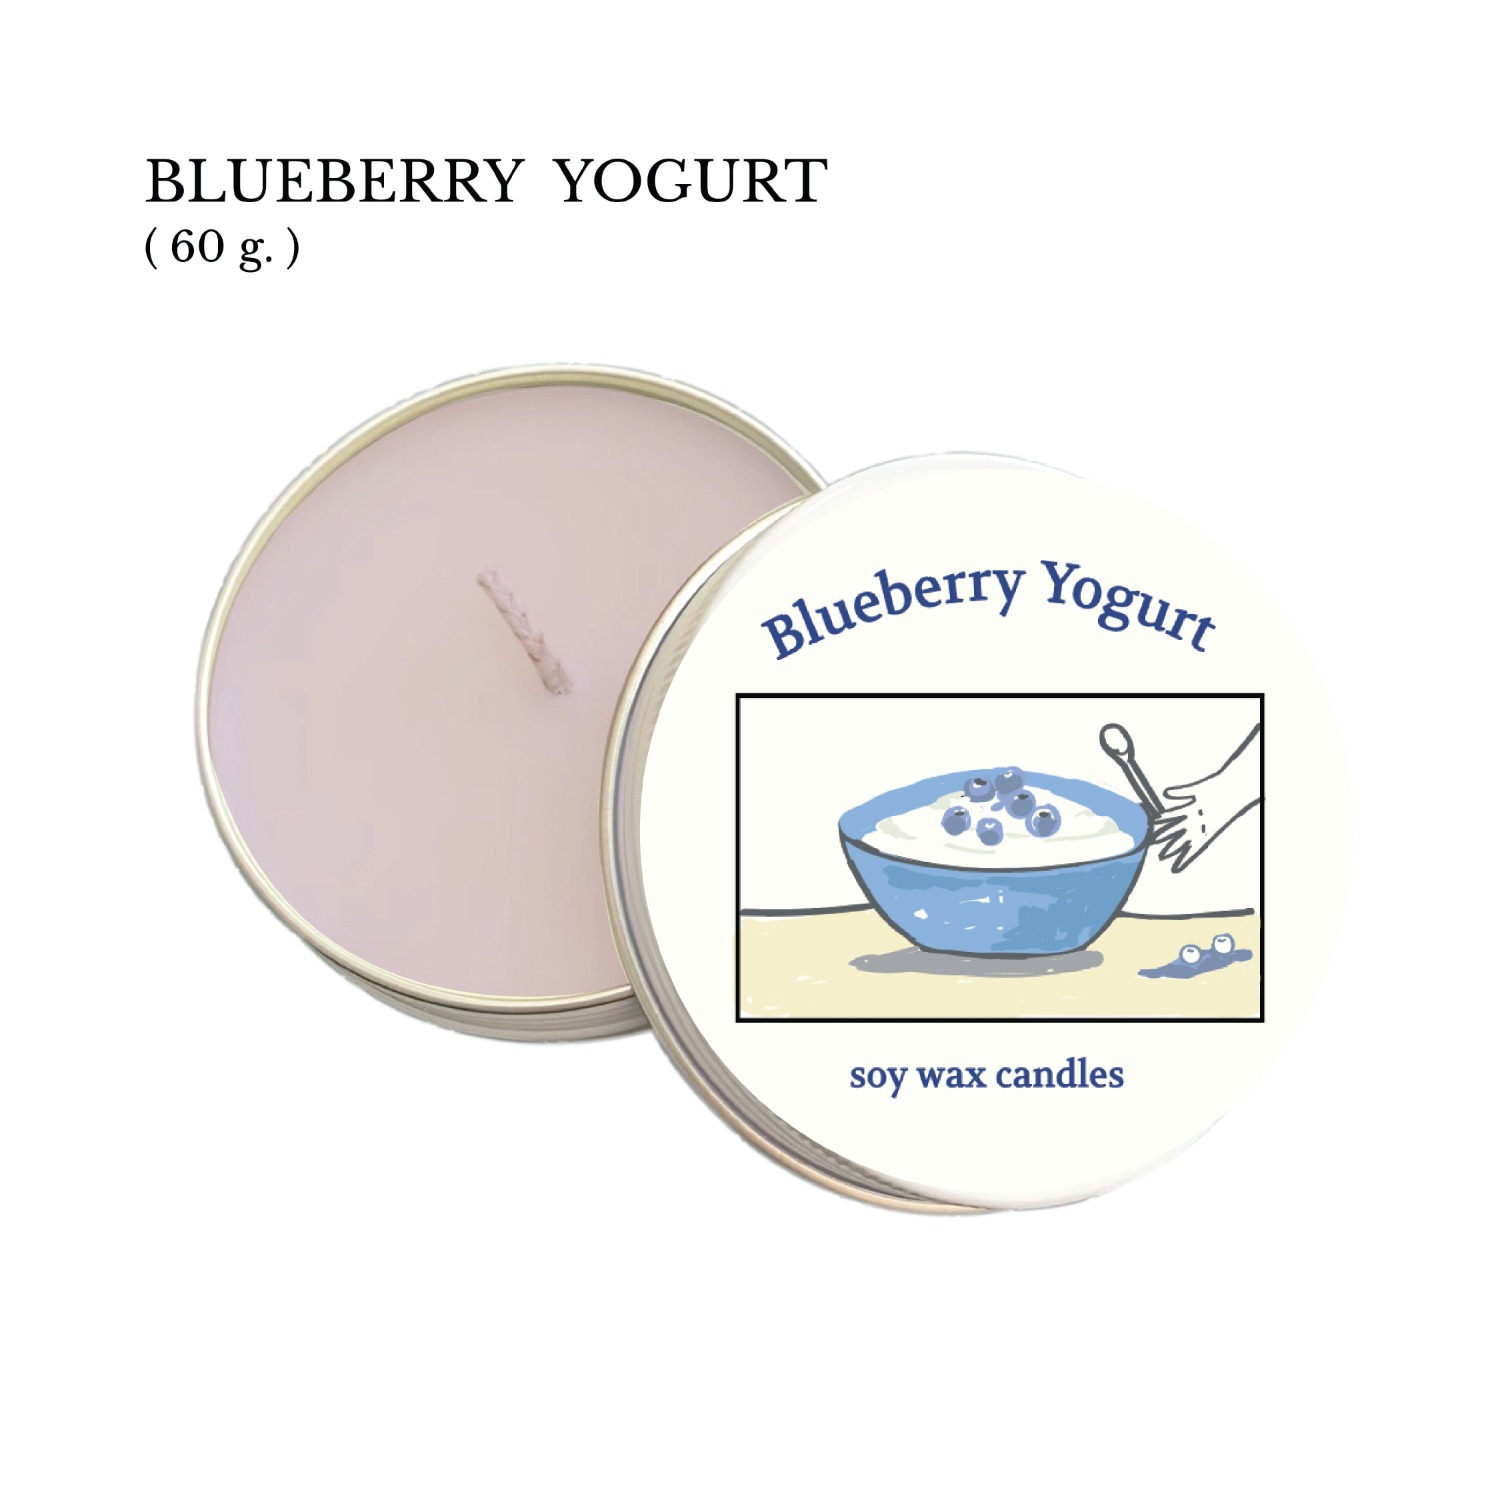 Blueberry yogurt soy candles cassette